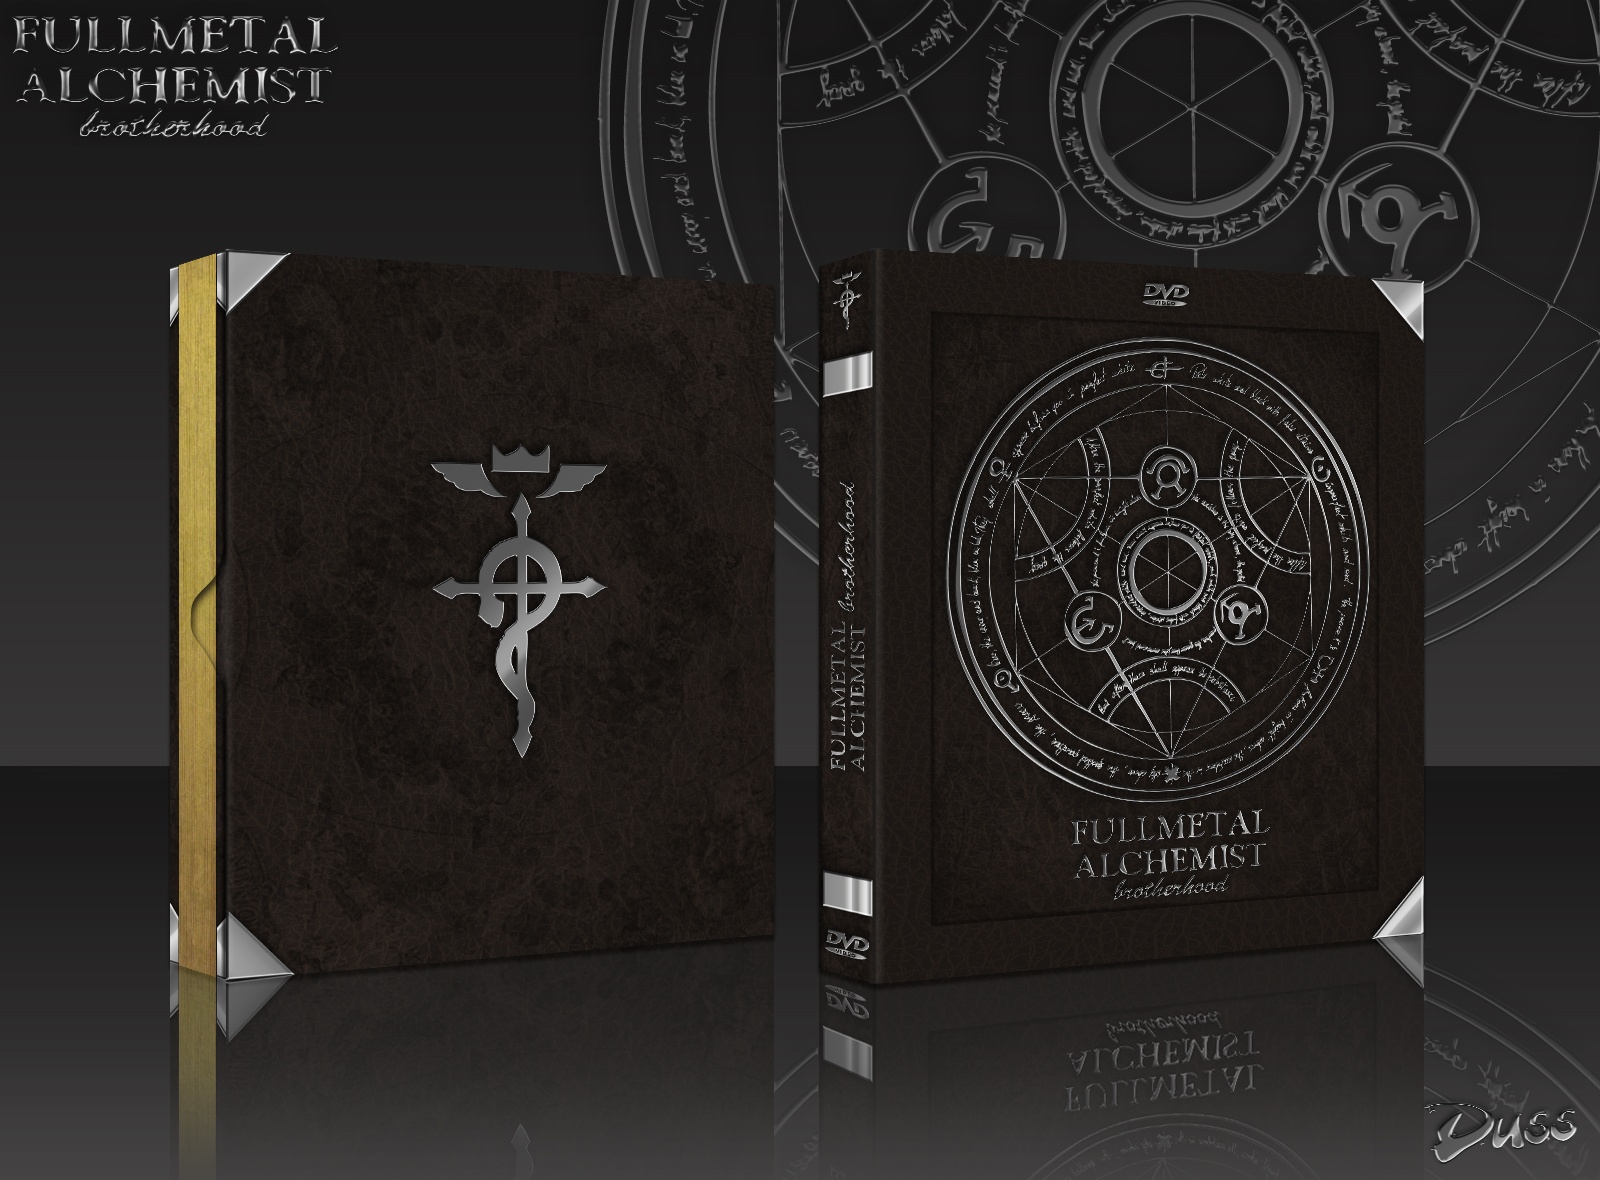 Full metal alchemist brotherhood box cover